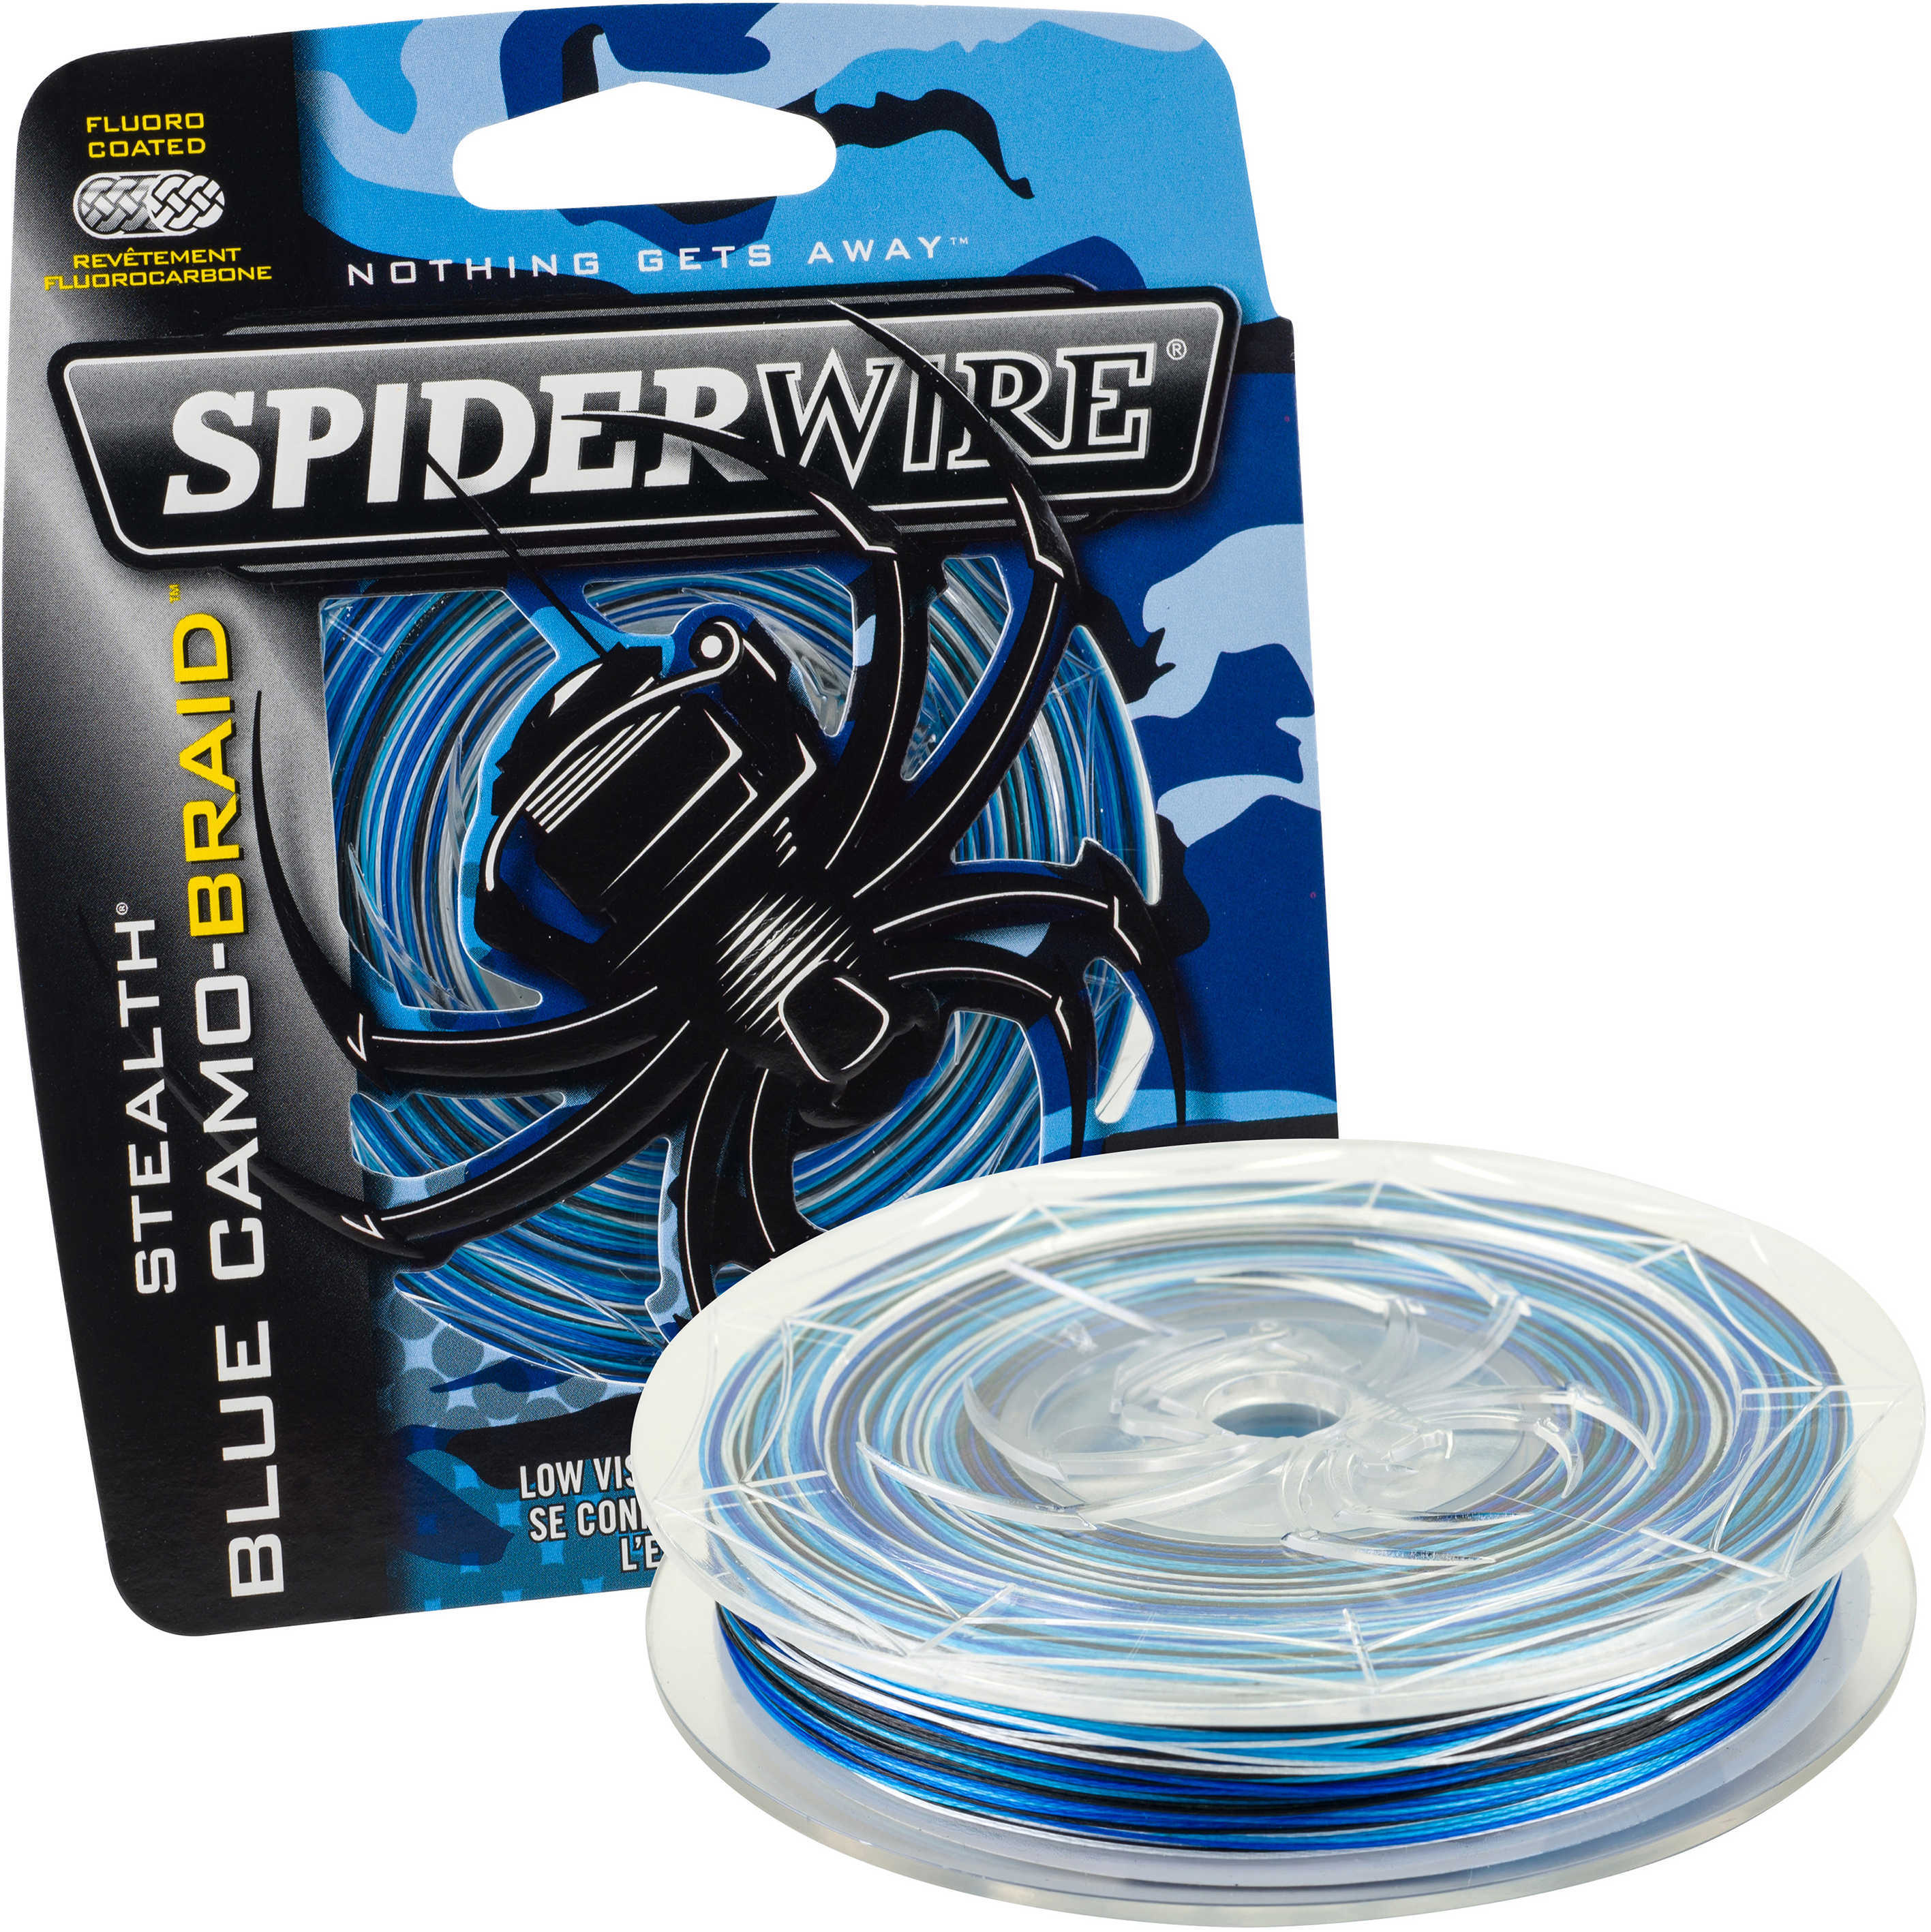 Spiderwire Stealth Braid 125 Yards , 10 lbs Strength, 0.008" Diameter, Blue Camo Md: 1368916